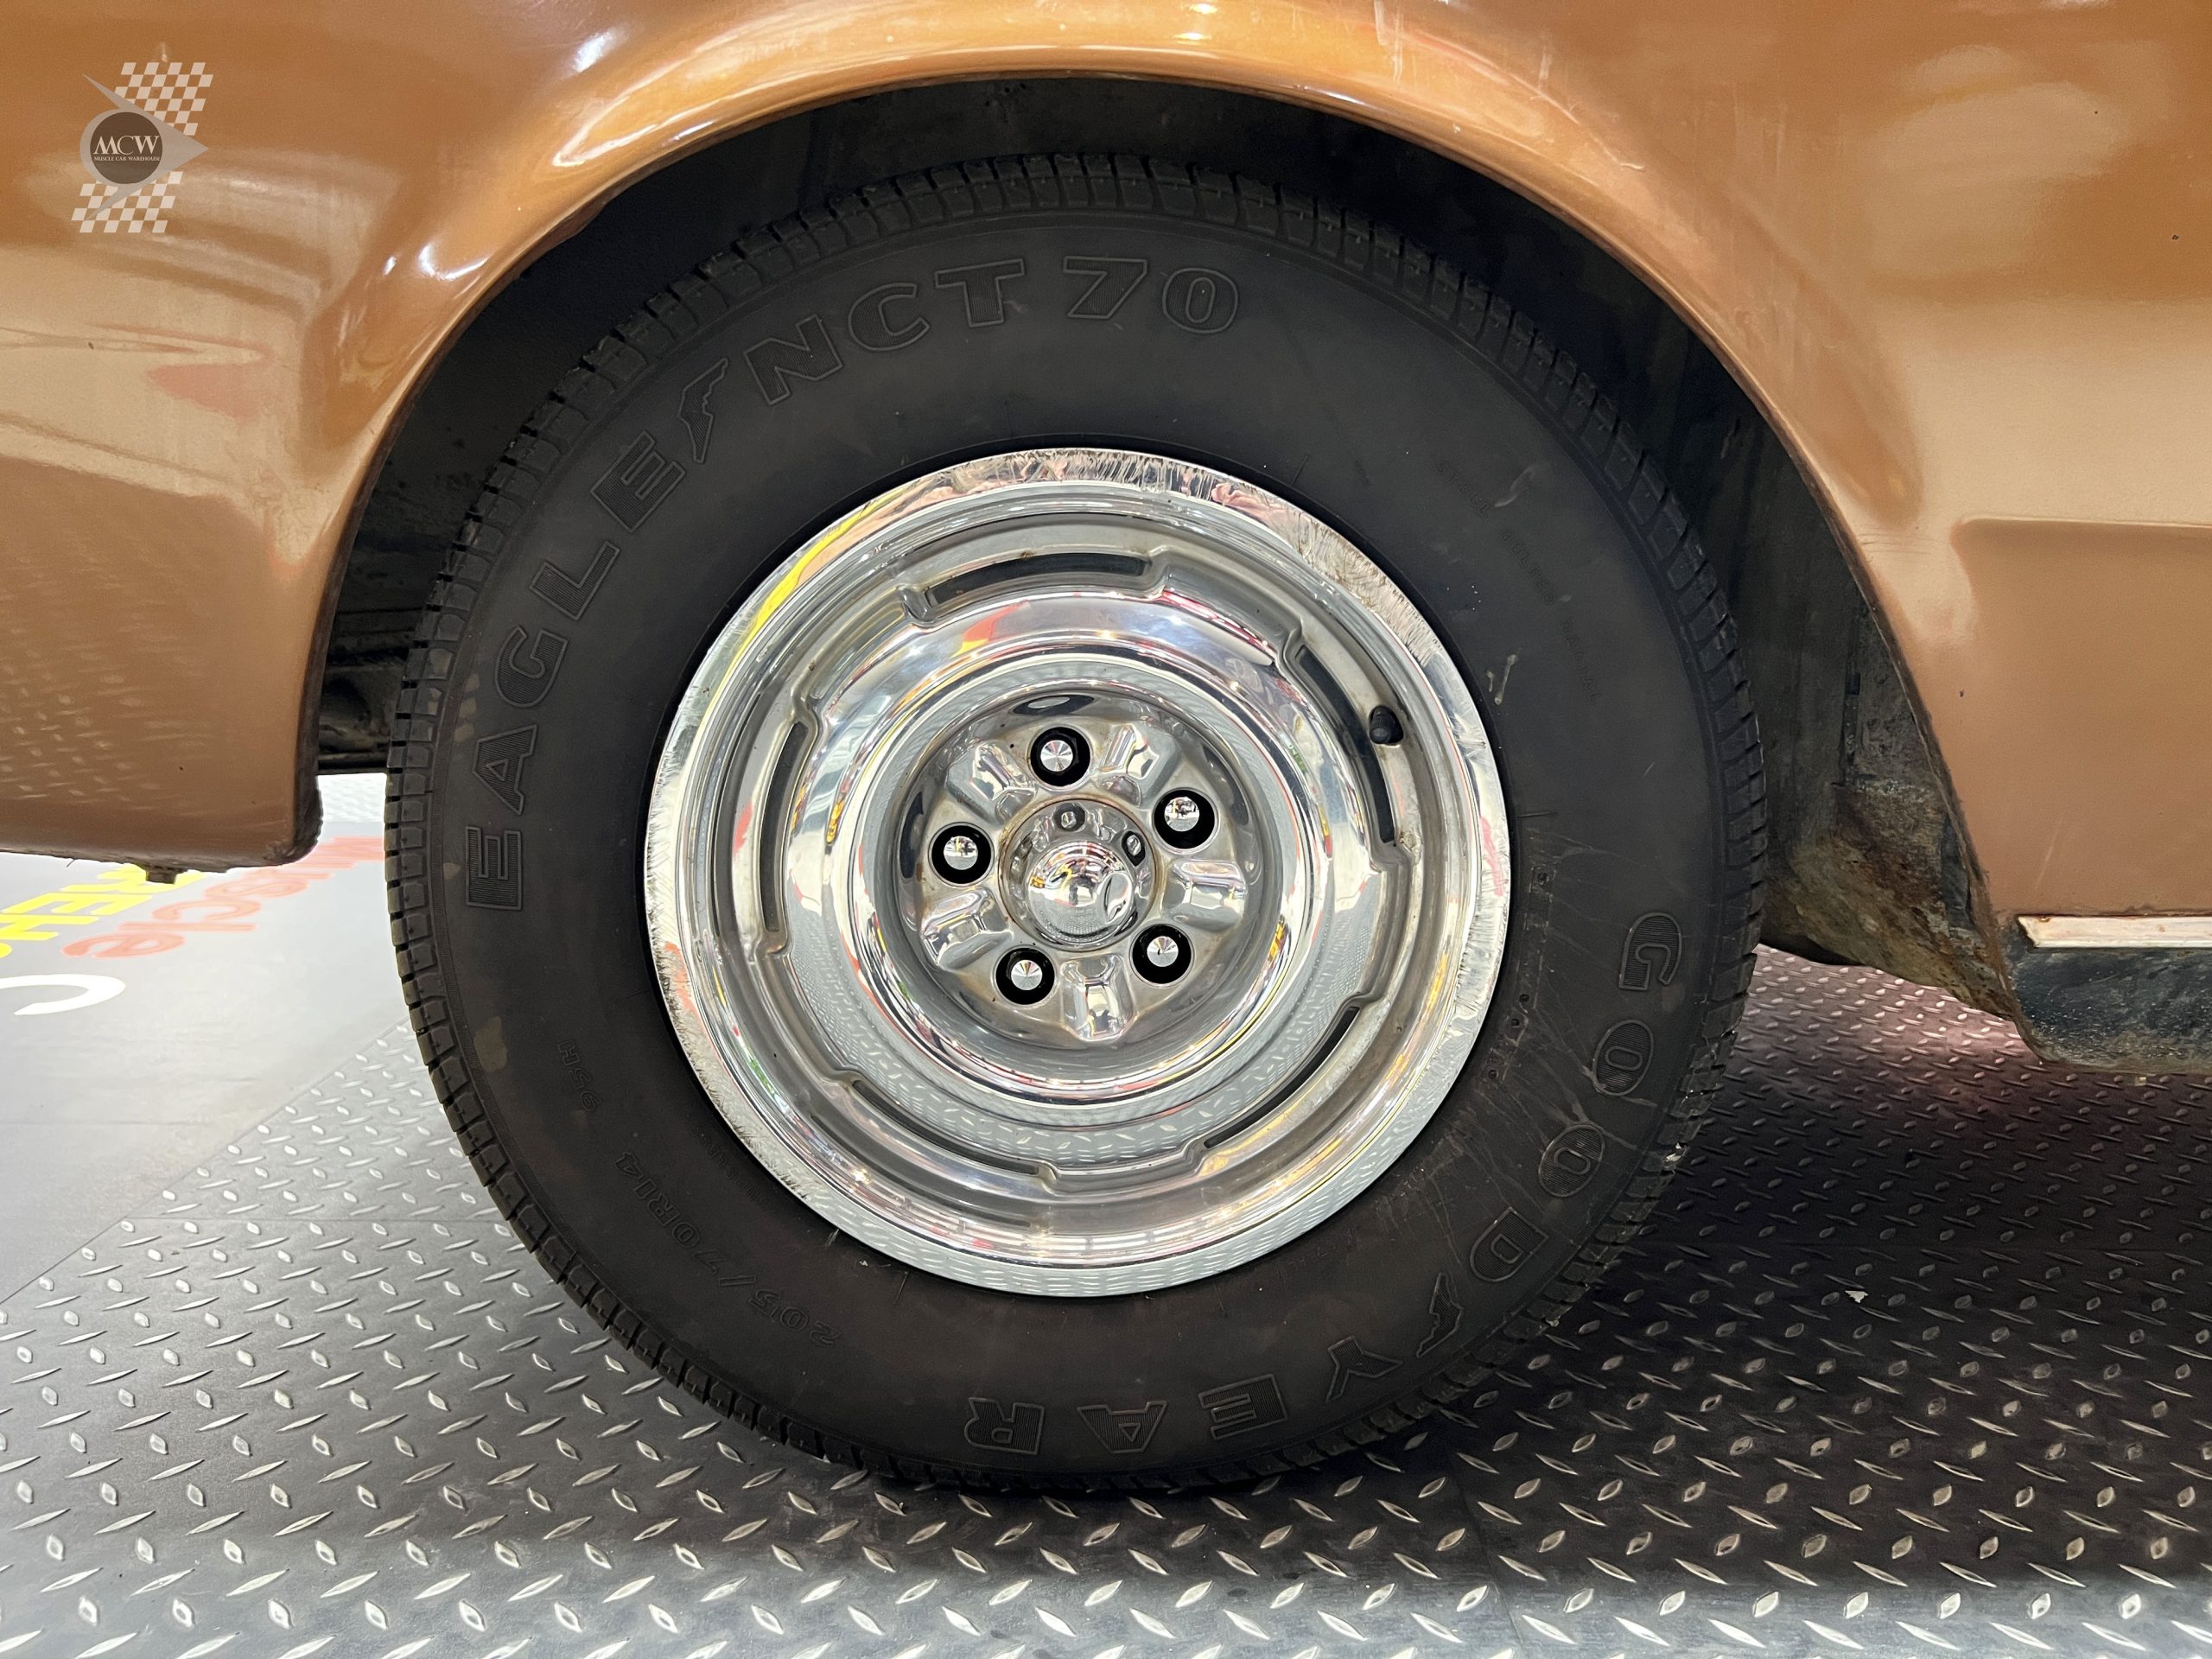 1968 Ford Falcon XT GT Wheel - Muscle Car Warehouse